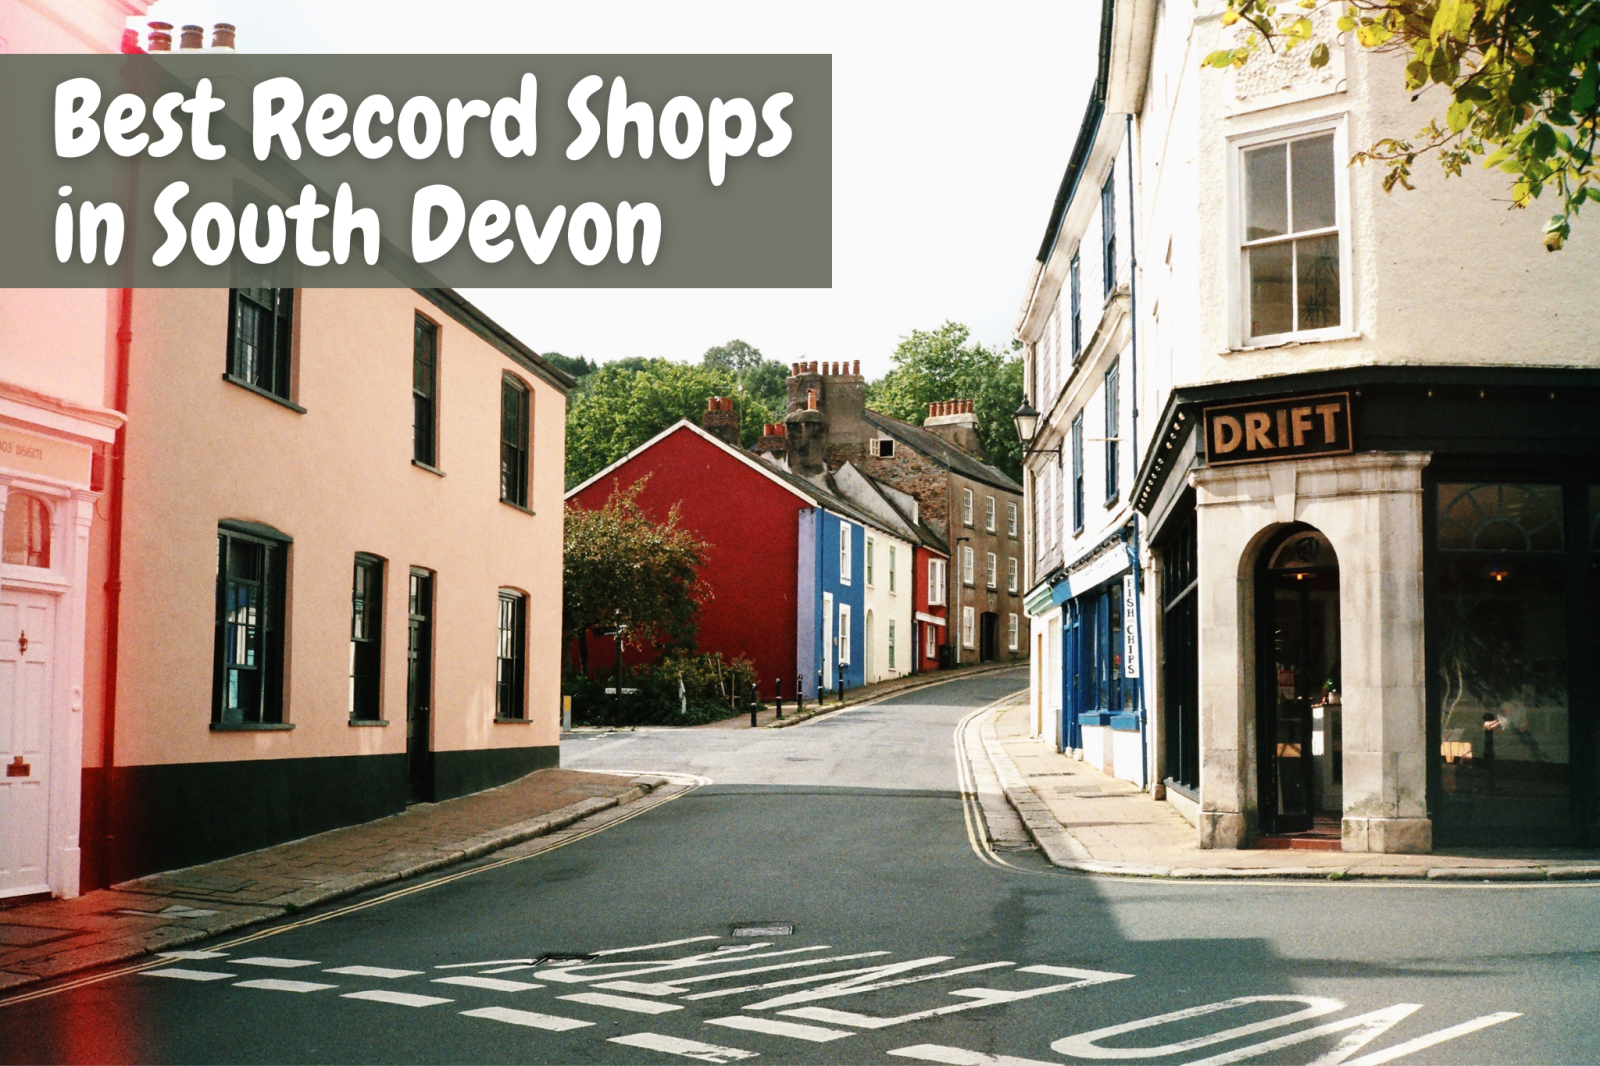 Best Record Shops in Devon